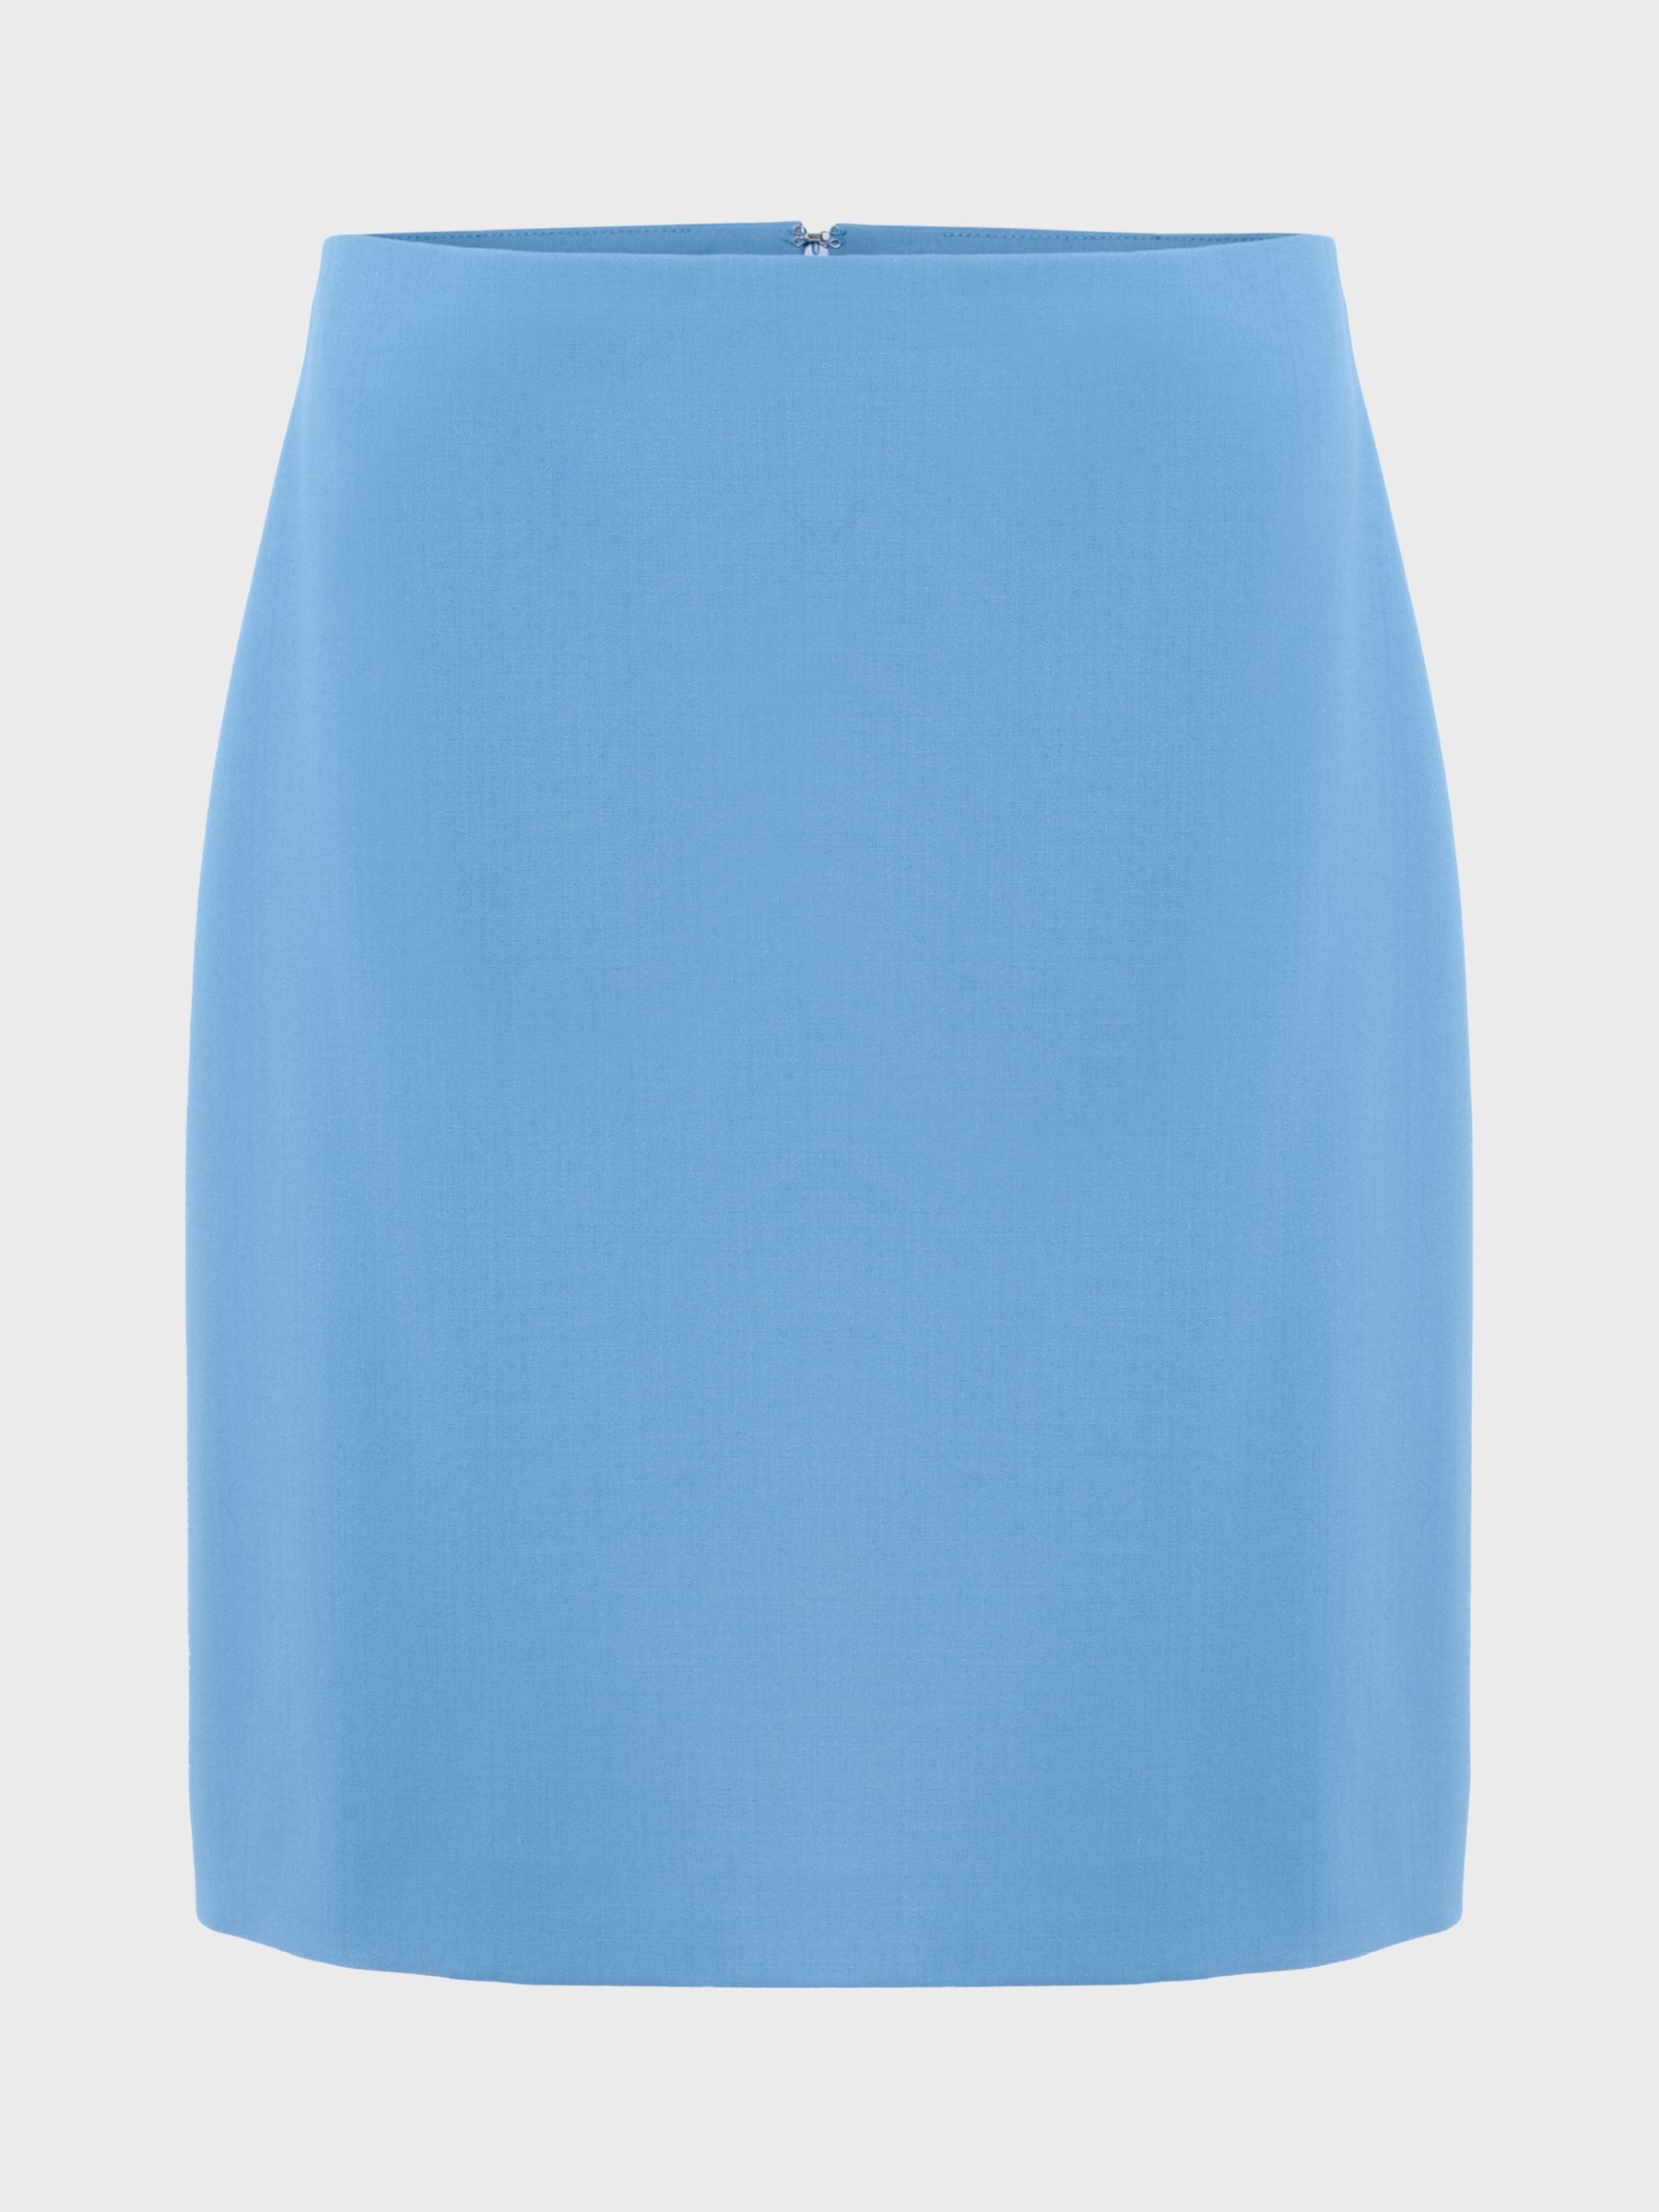 Hobbs Francesca Pencil Skirt, Azure at John Lewis & Partners